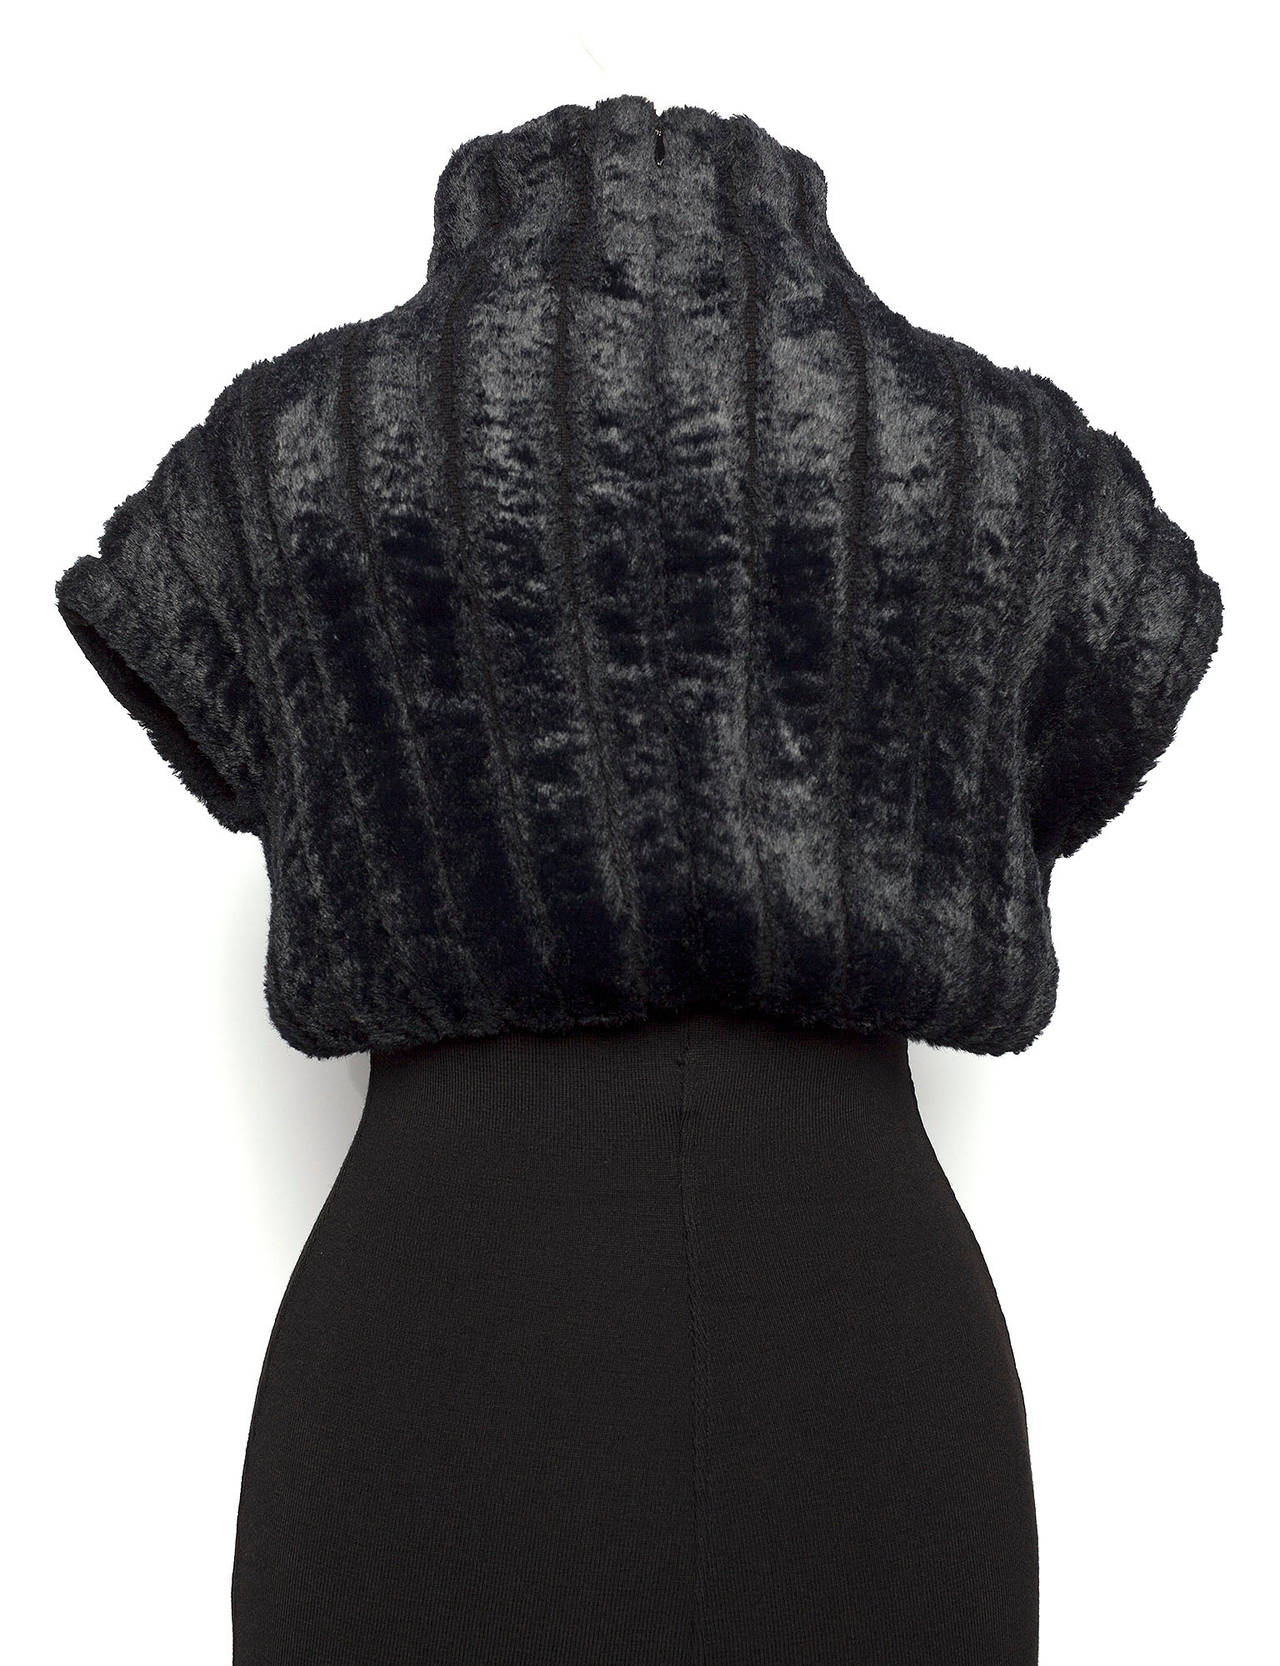 Azzendine Alaia Paris Black Chenille bodycon knit dress 1990's 1